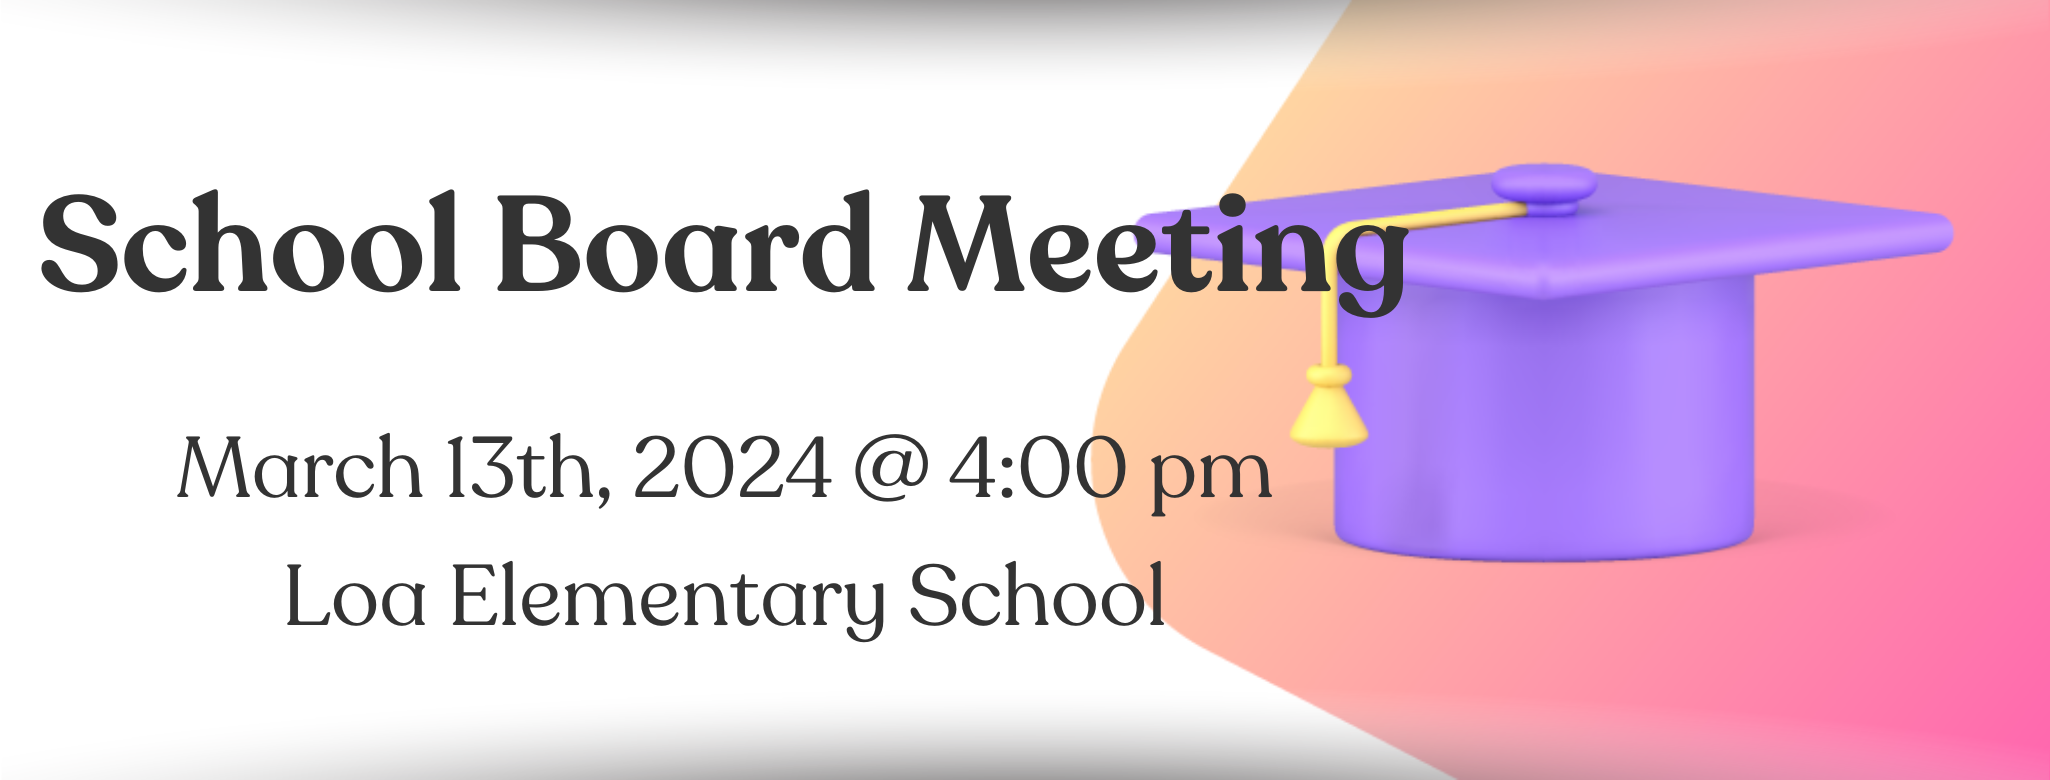 School Board Meeting Mar24 2